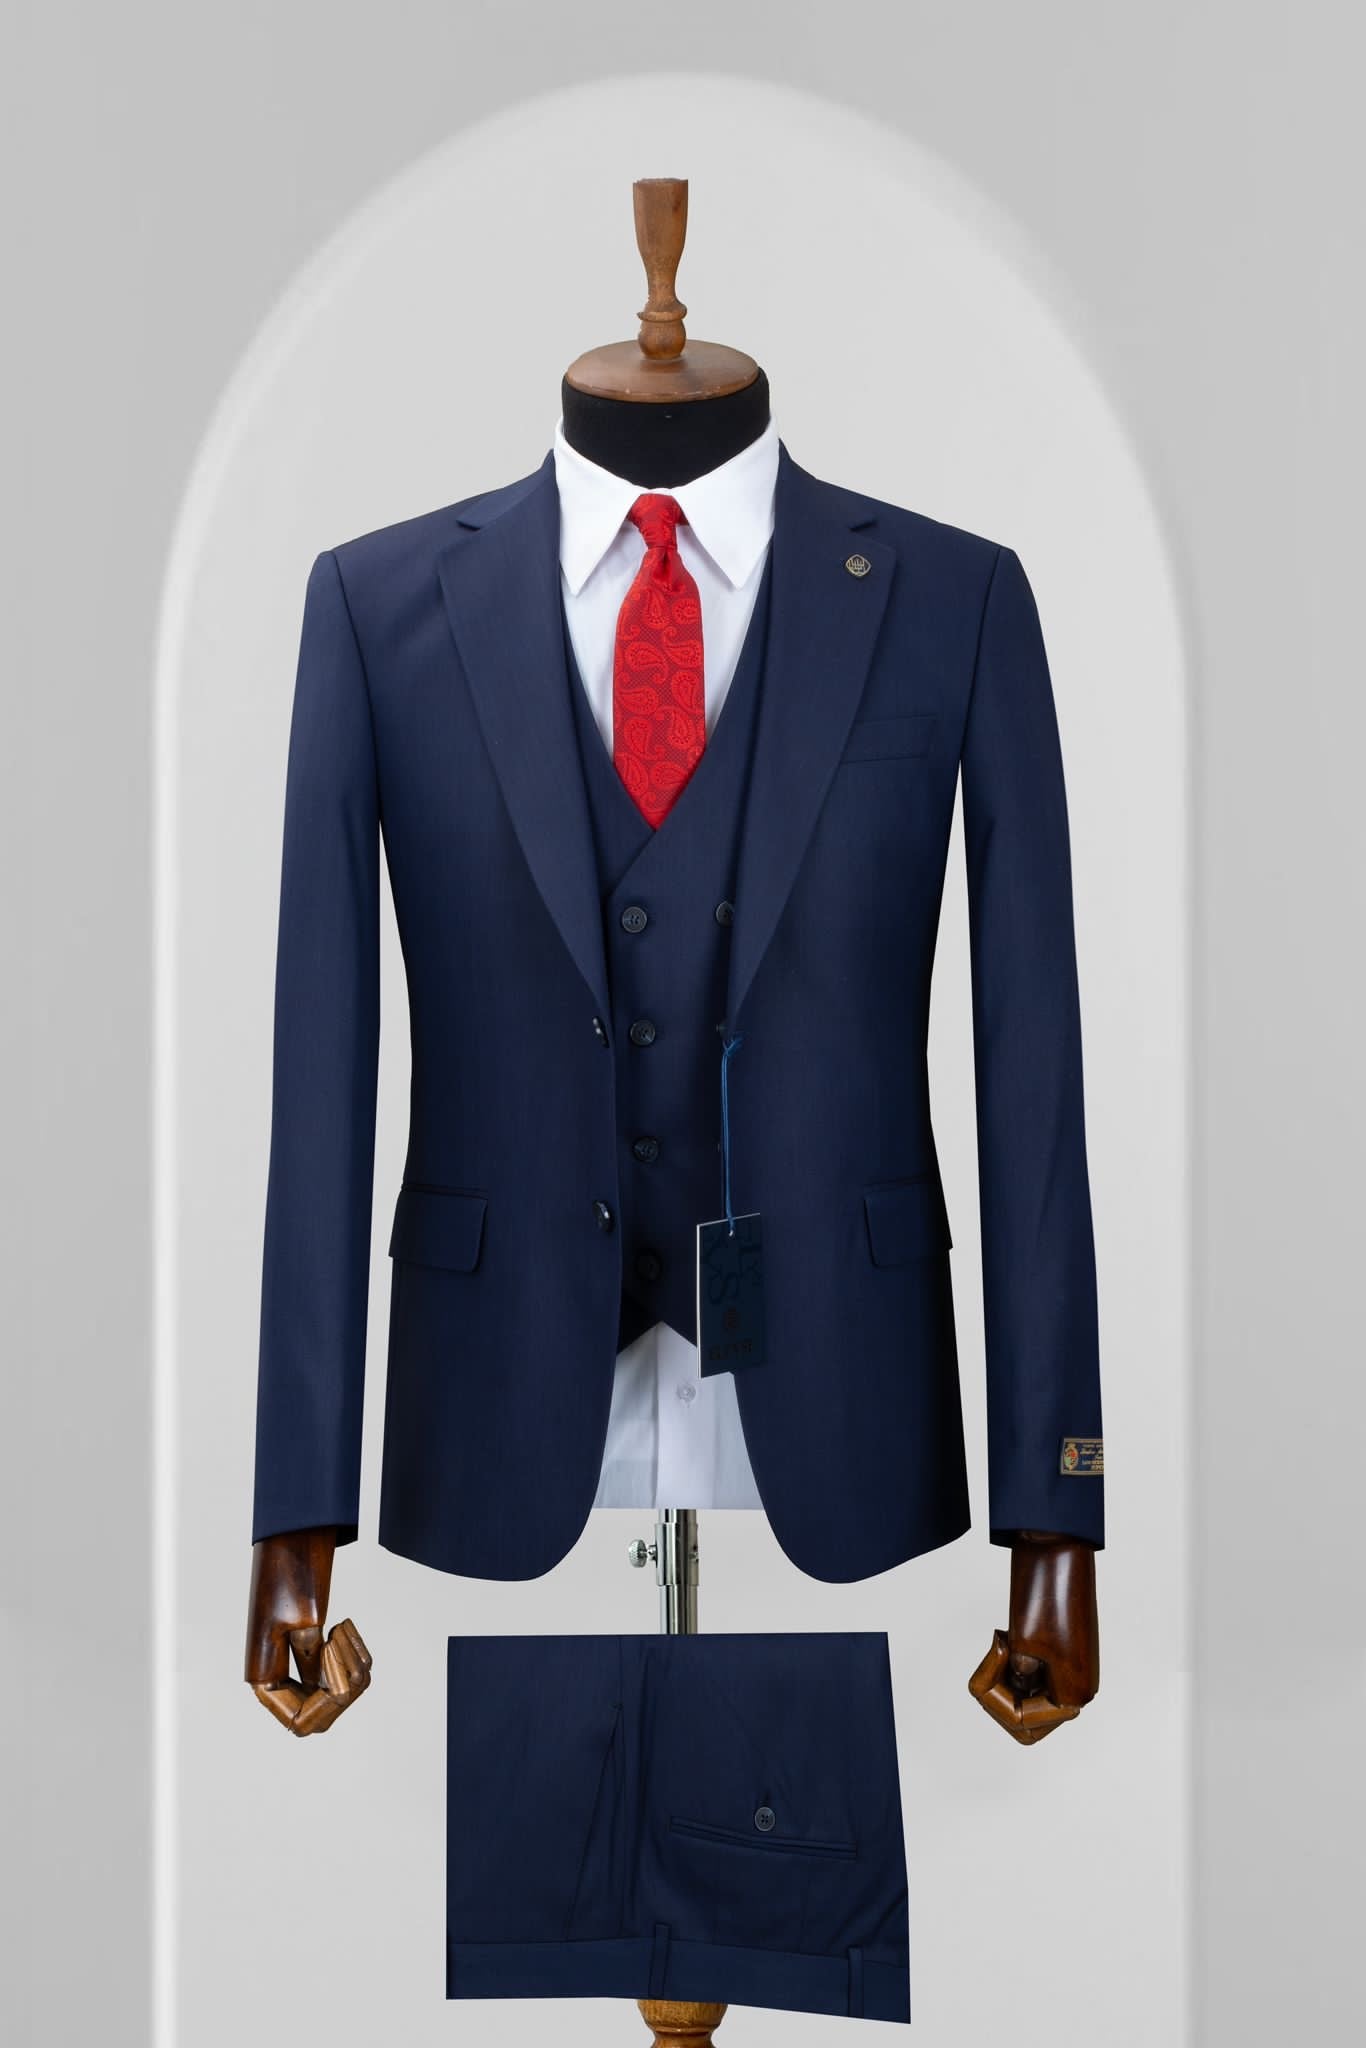 Turkish 3-Piece Suit Wholesale: Authentic 3-Piece Elegance for Discerning Retailers - 6 Suit Pack (Model: AA_Tur_4_240)